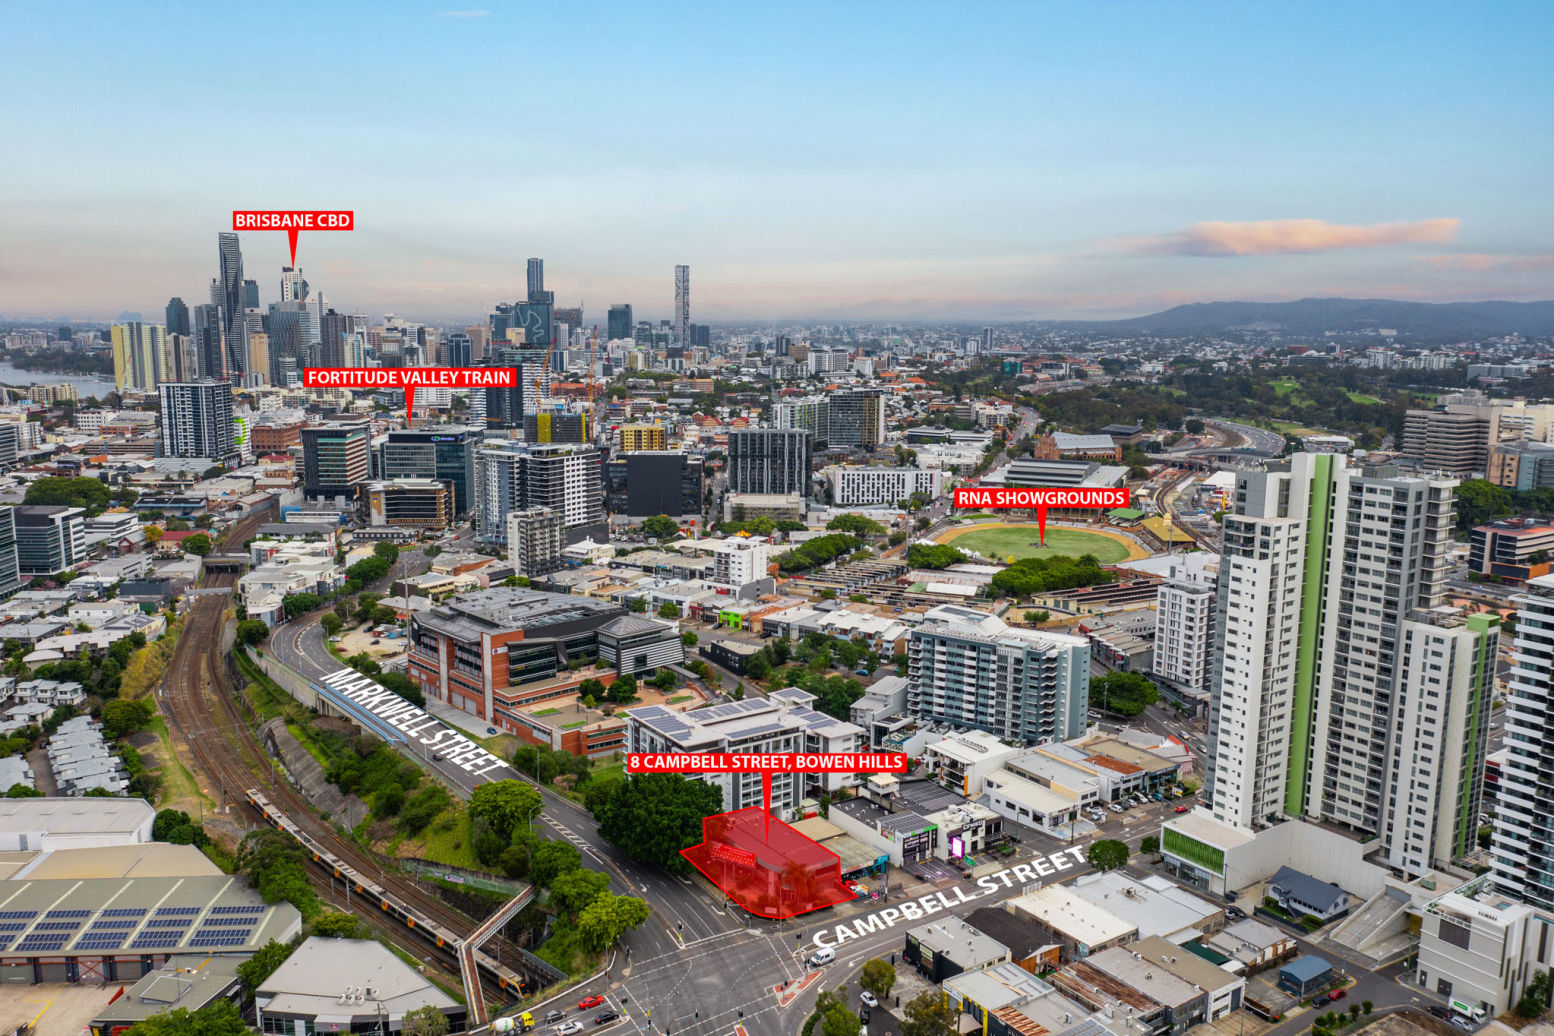 Tenanted Investment Property for sale Bowen Hills Brisbane          Fortitude Valley Brisbane